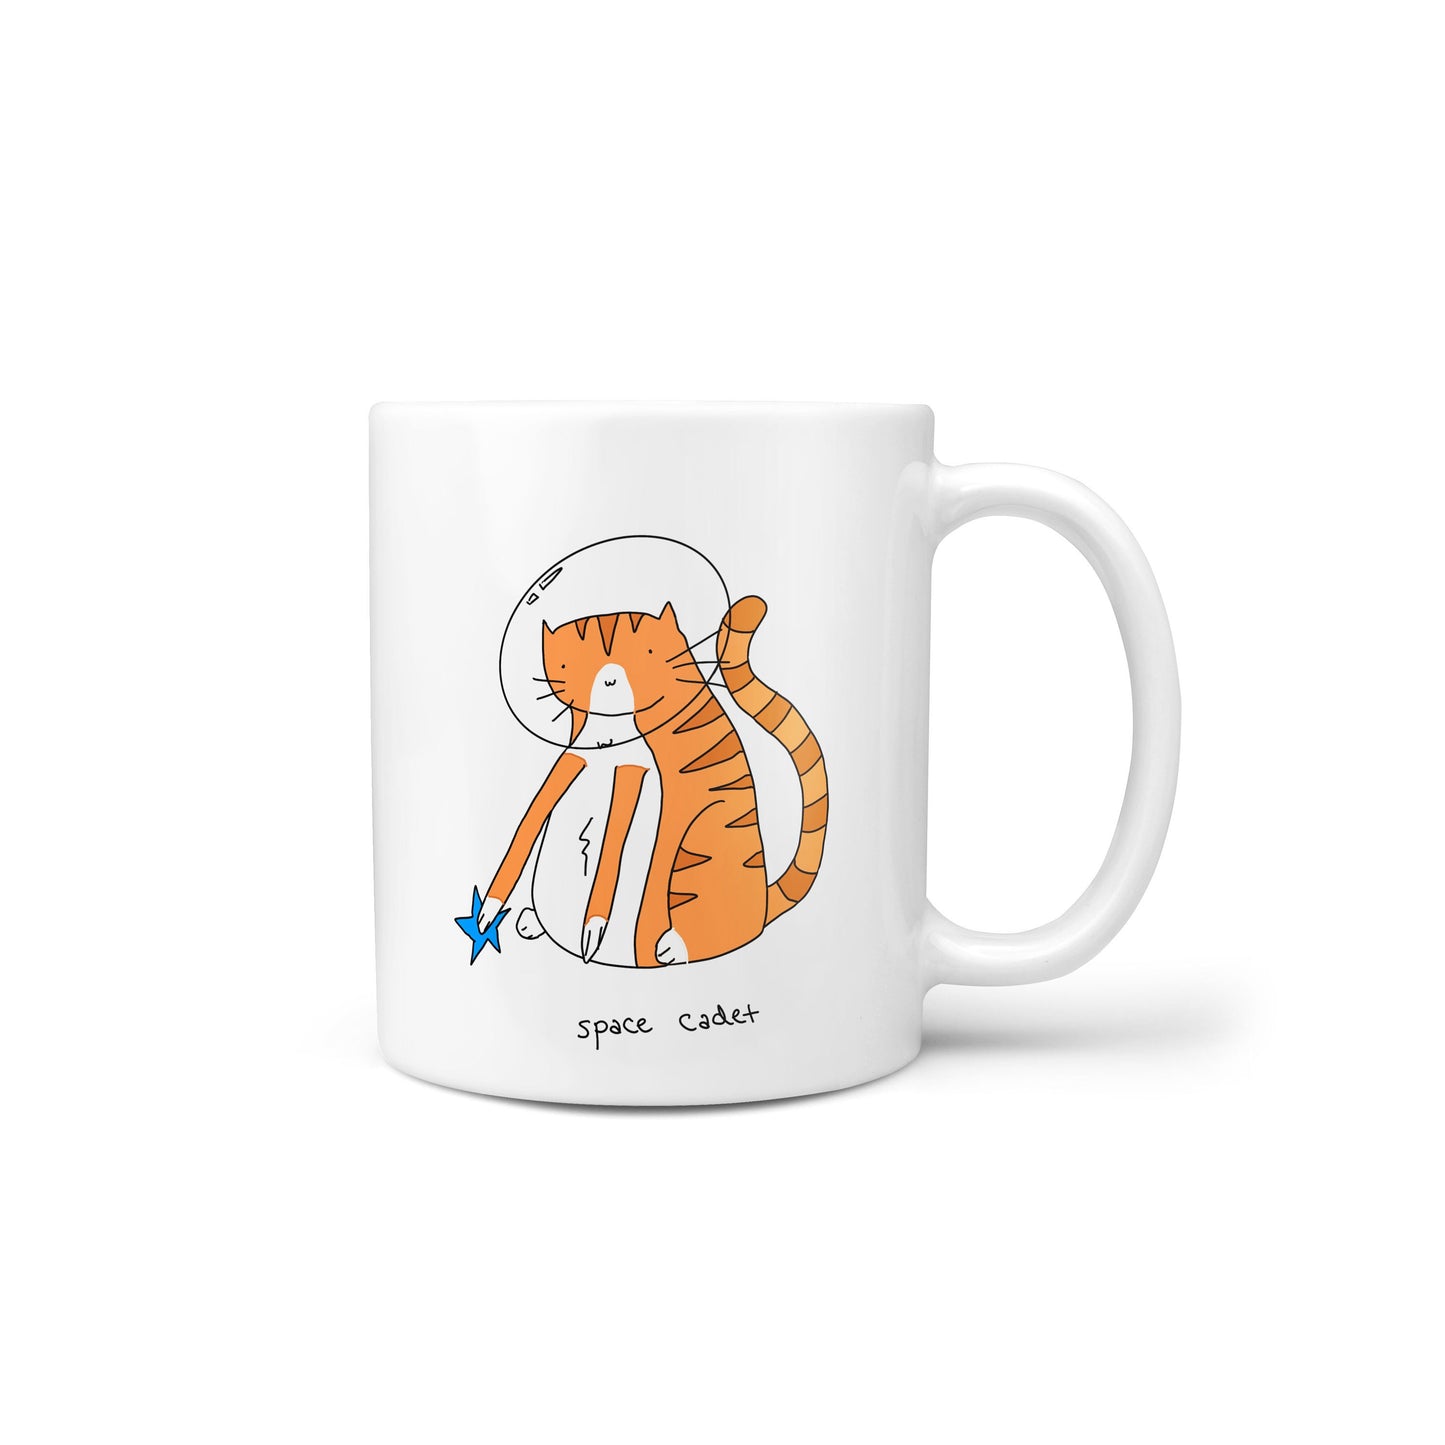 Space Cadet Orange Tabby Coffee Mug, Astronaut Cat Mug, Space Mug, Cat Fan Mug, Orange Tabby Mug, Funny Coffee Mug, Cute Cat Coffee Mug